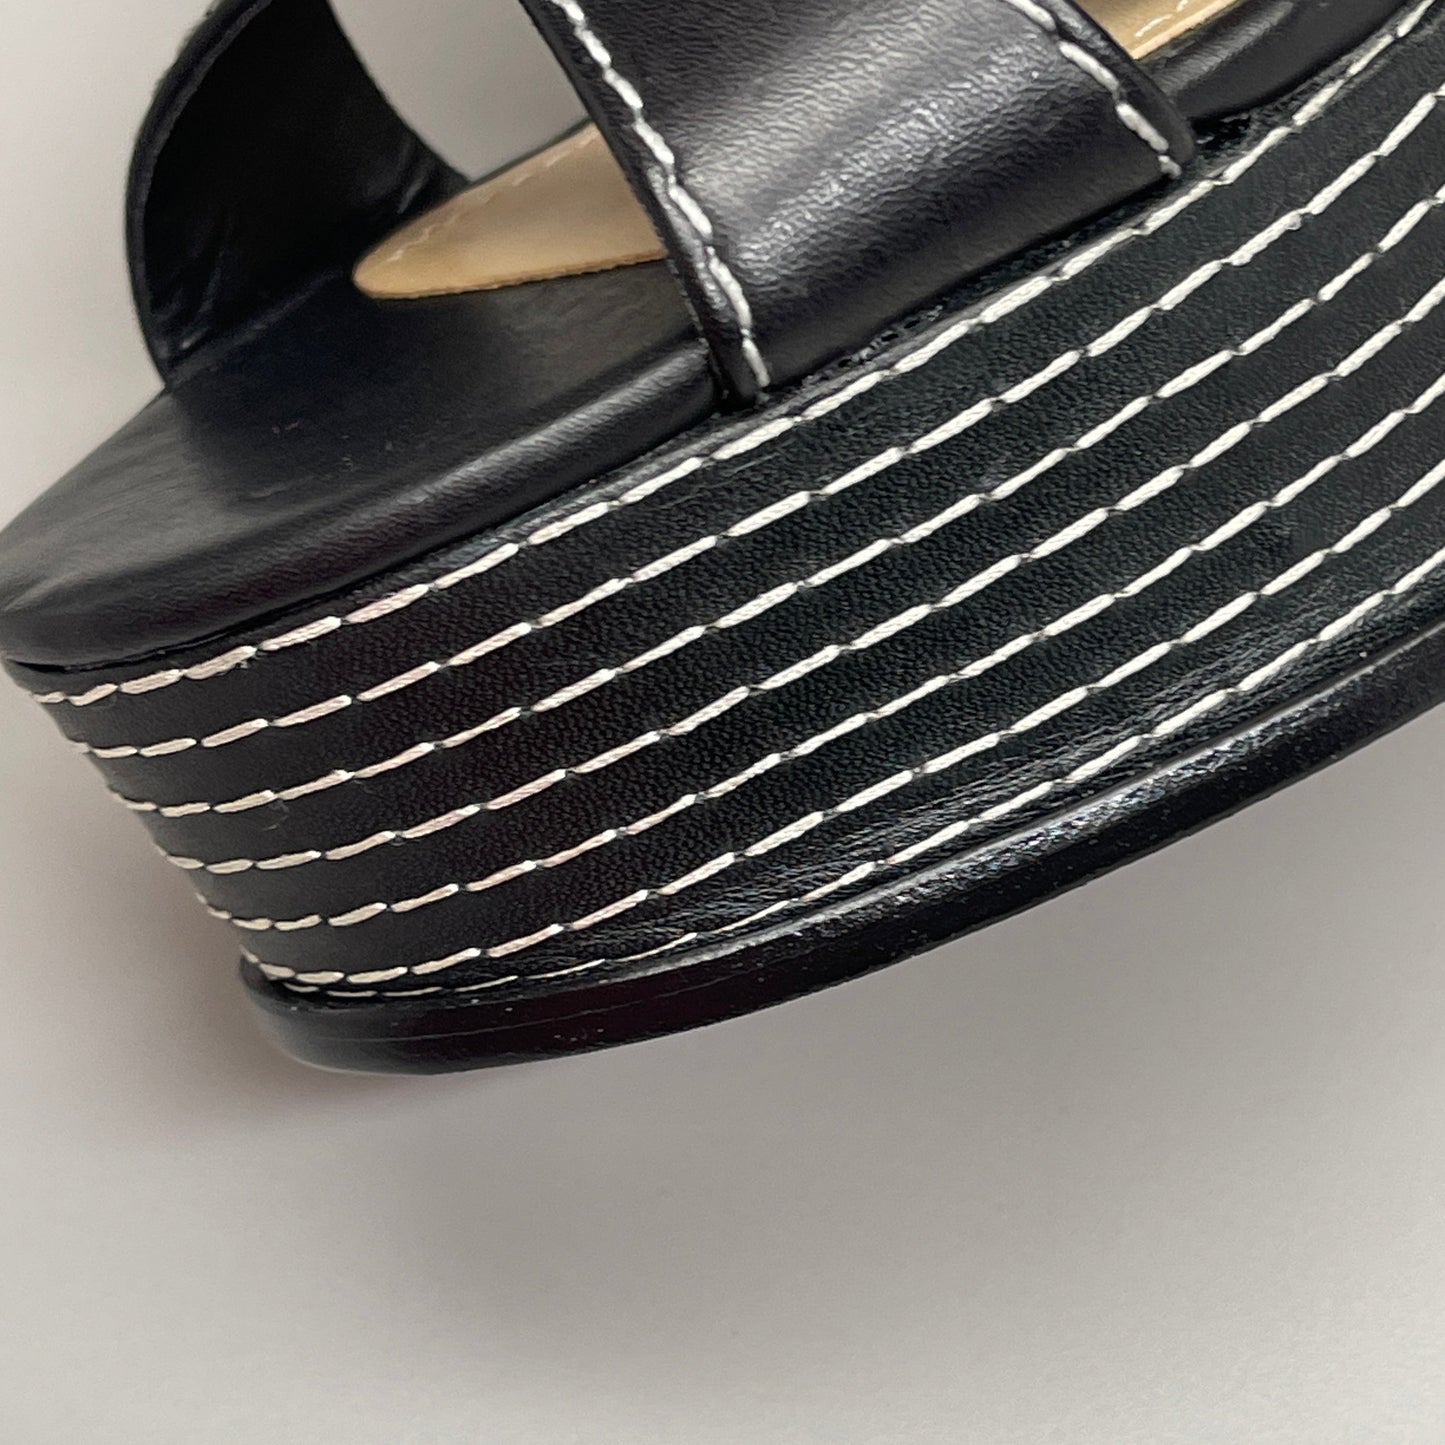 SCHUTZ Keefa Casual Women's Leather Sandal Black Platform 4" Heel Shoes Sz 7B (New)